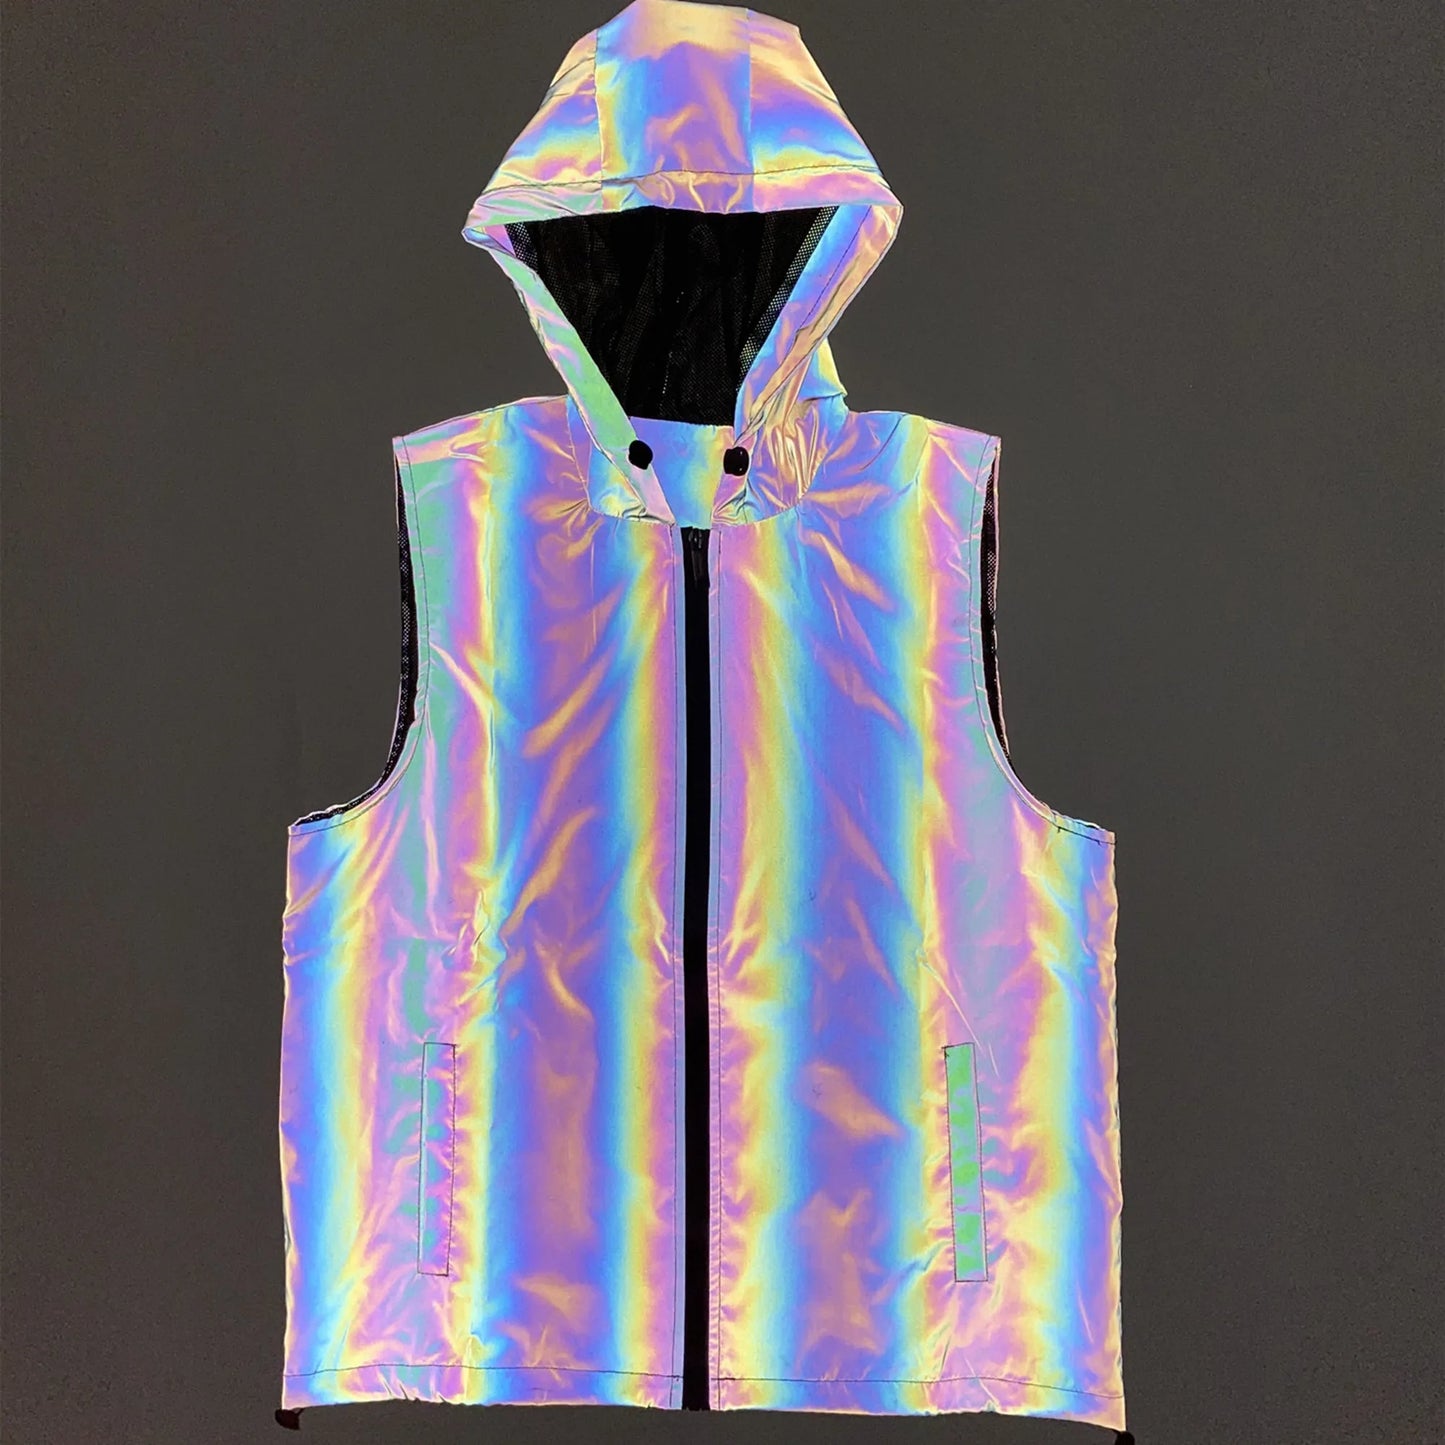 Holographic Reflective Rave Vest